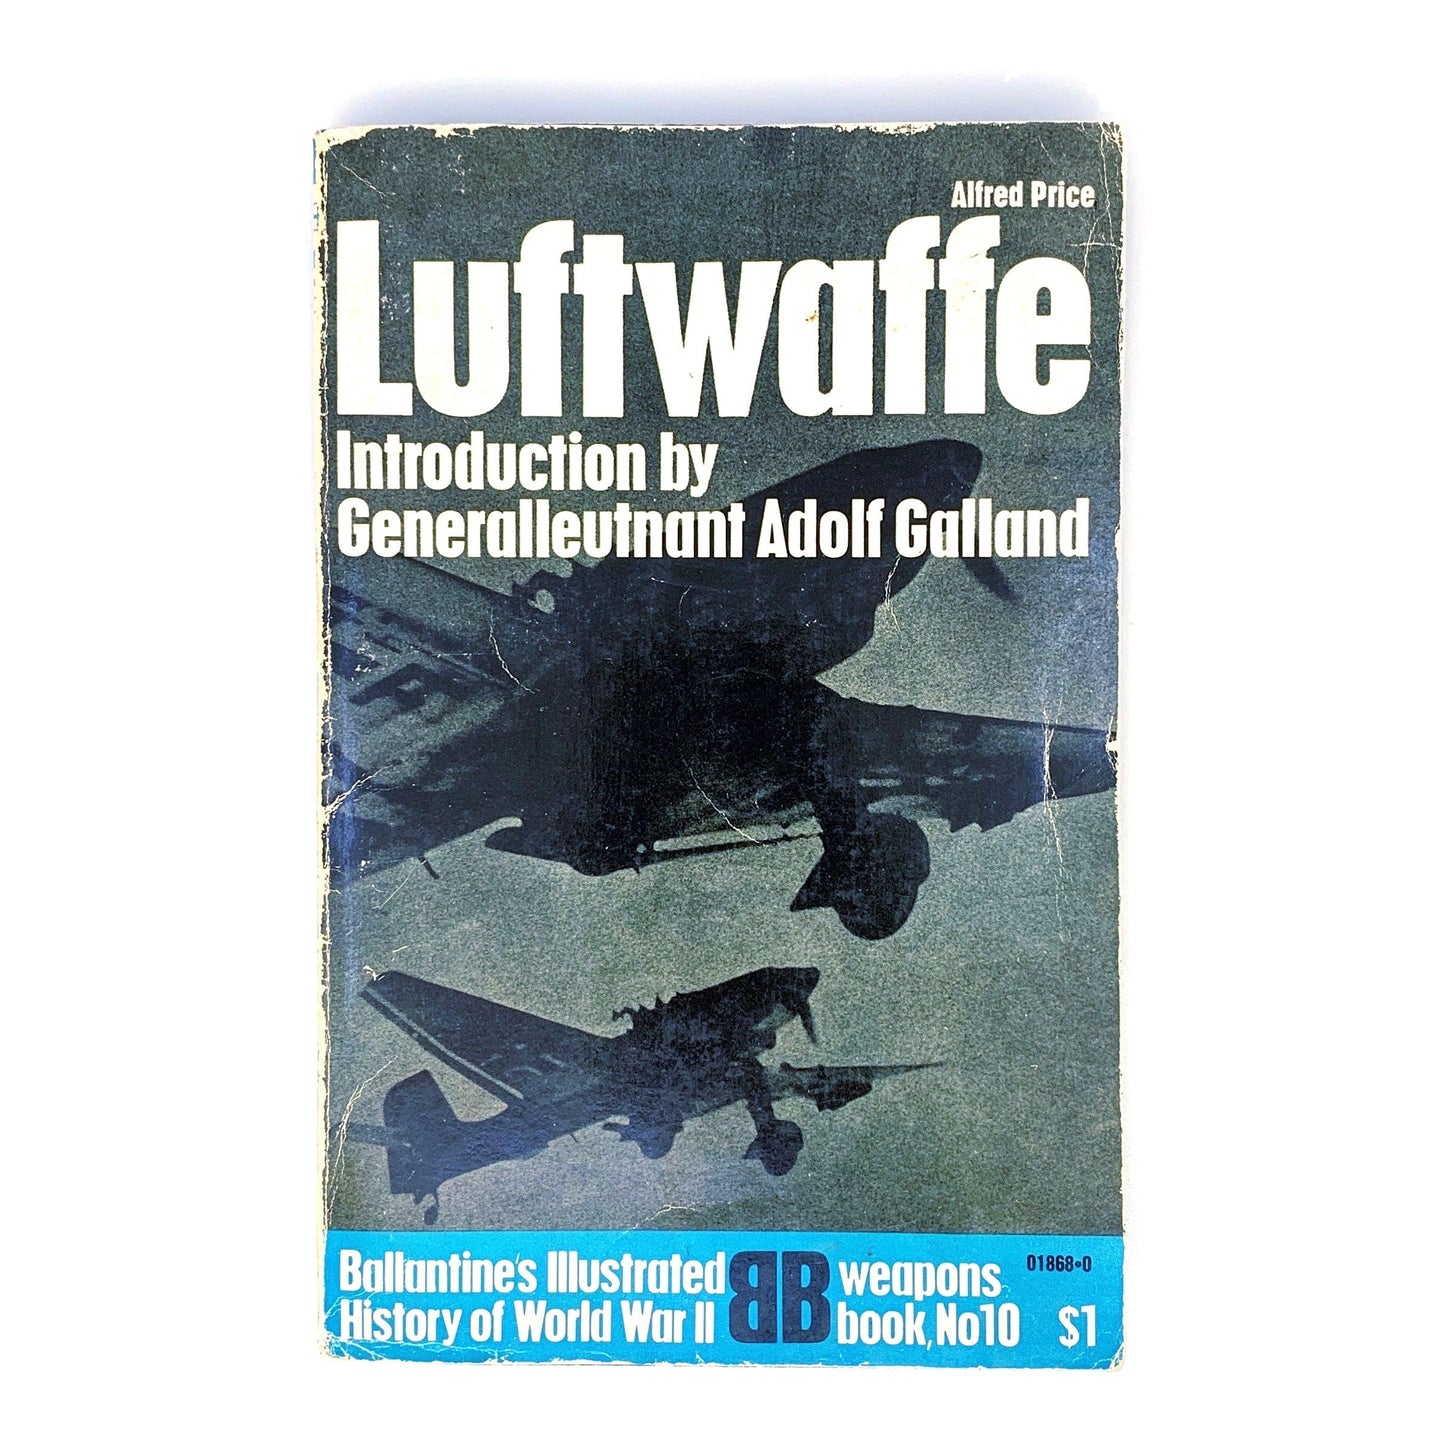 Ballantines Illustrated History of the Violent Century - Luftwaffe